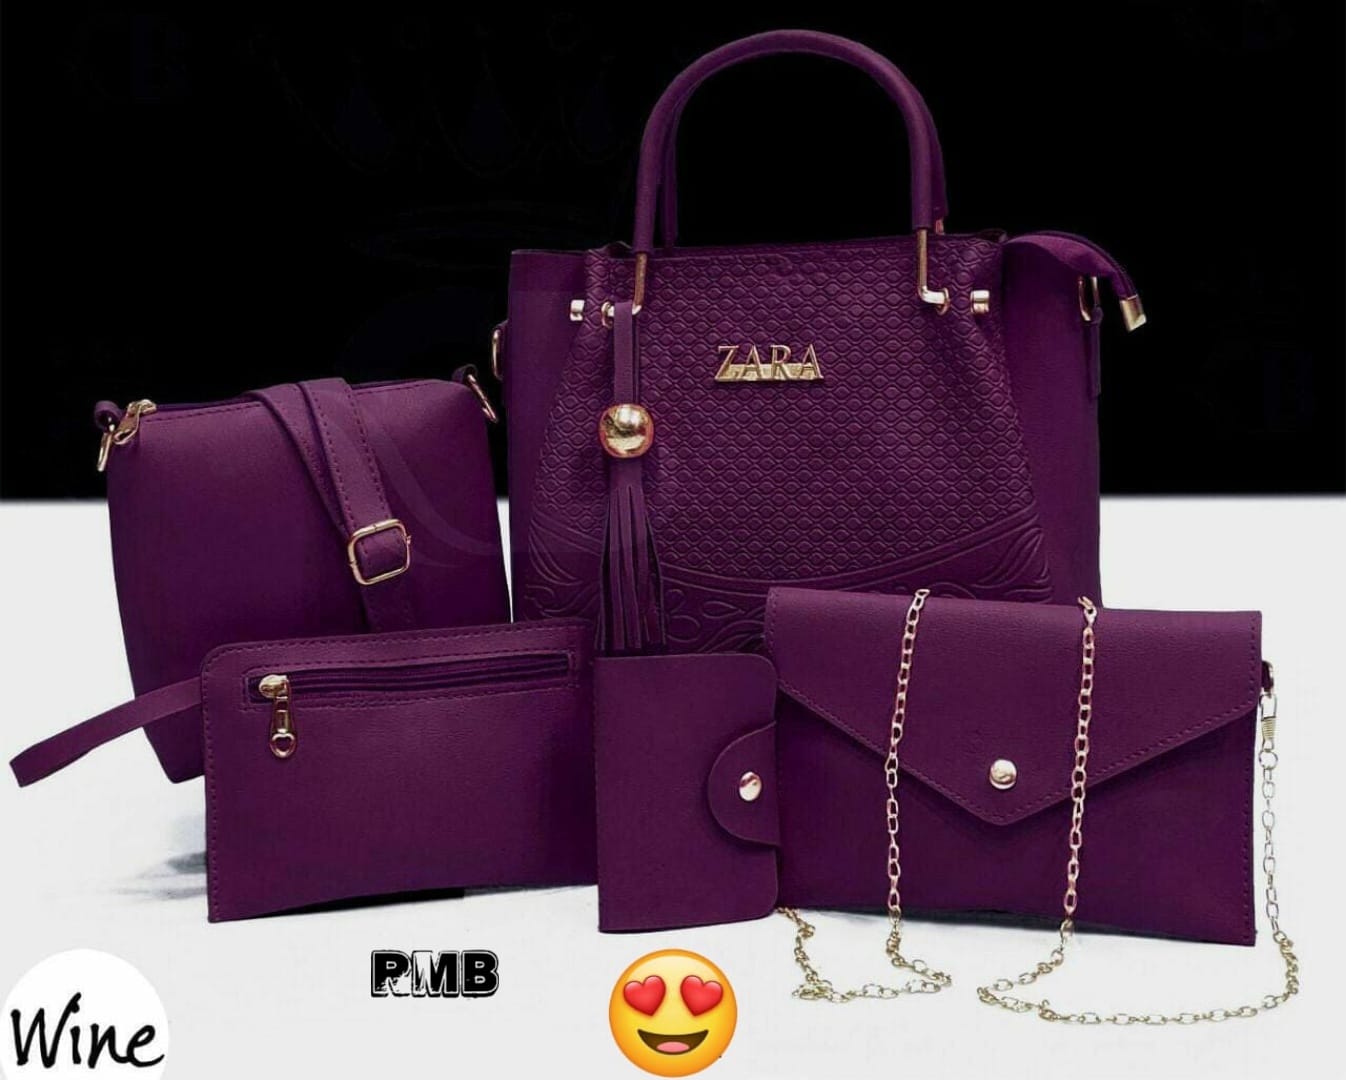 Zara Bag with Gold Chain | Zara bags, Black shoulder bag, Bags